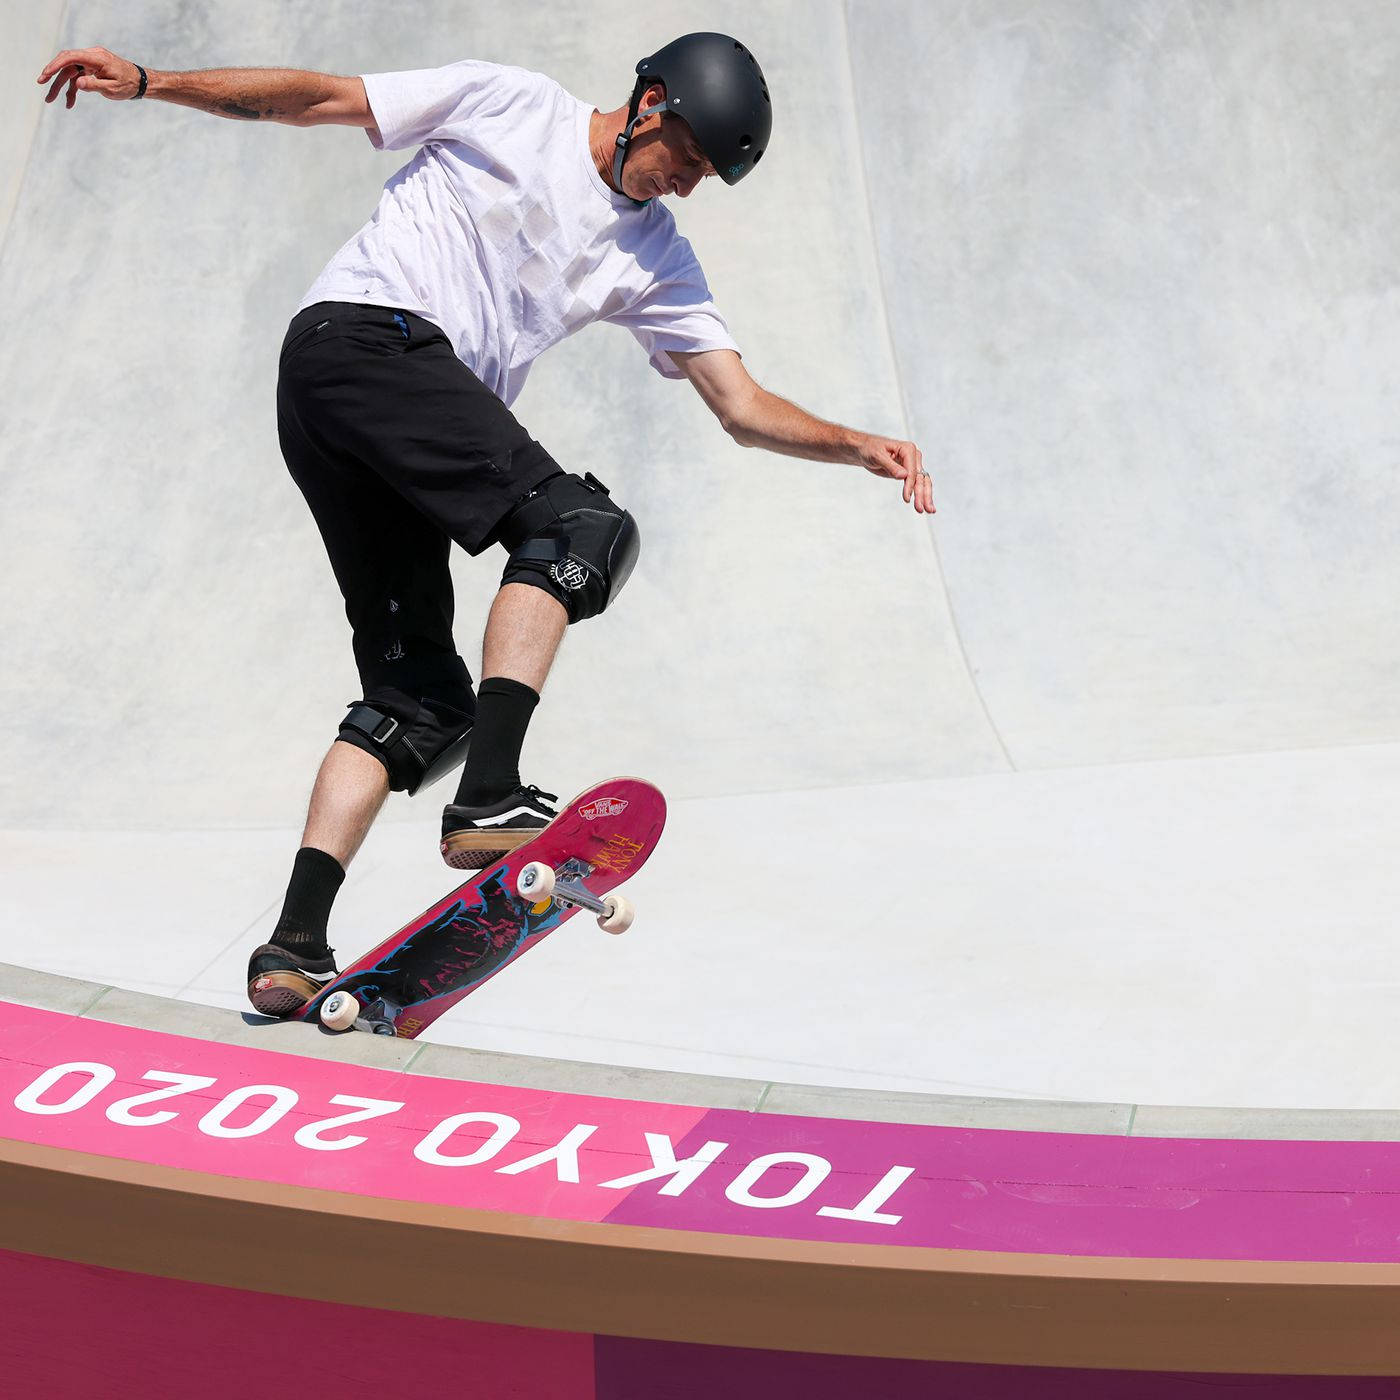 Bs Pivot Stall Skateboarding Picture